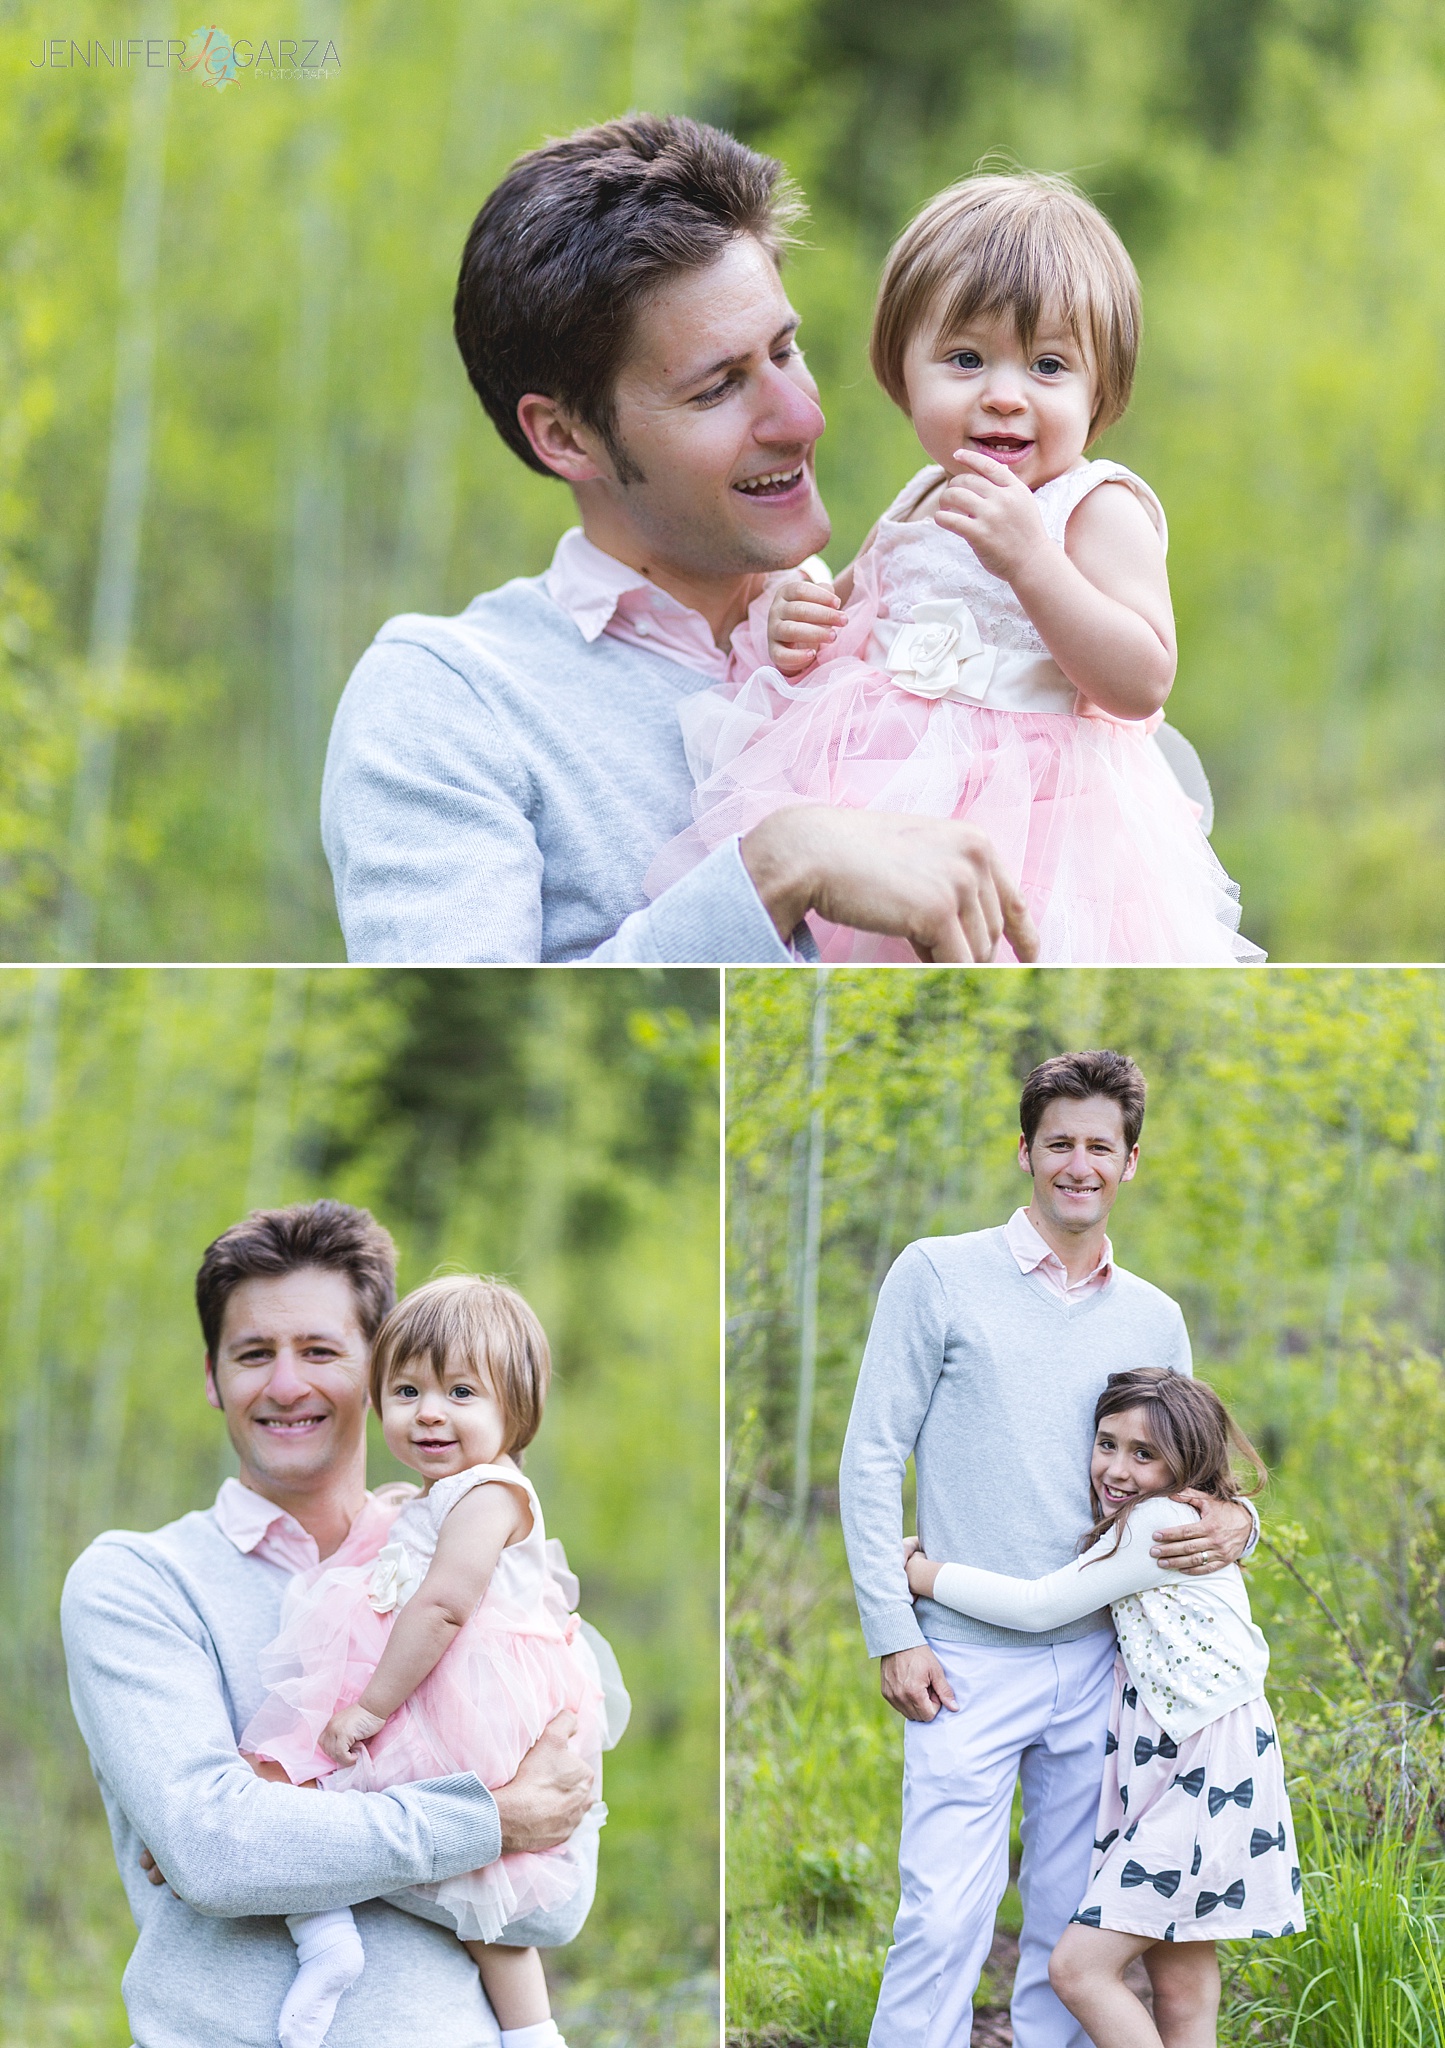 Daddy's Girls - Tom with Savannah & Rhyanne. Sylvan Lake family photos near Vail, Colorado.